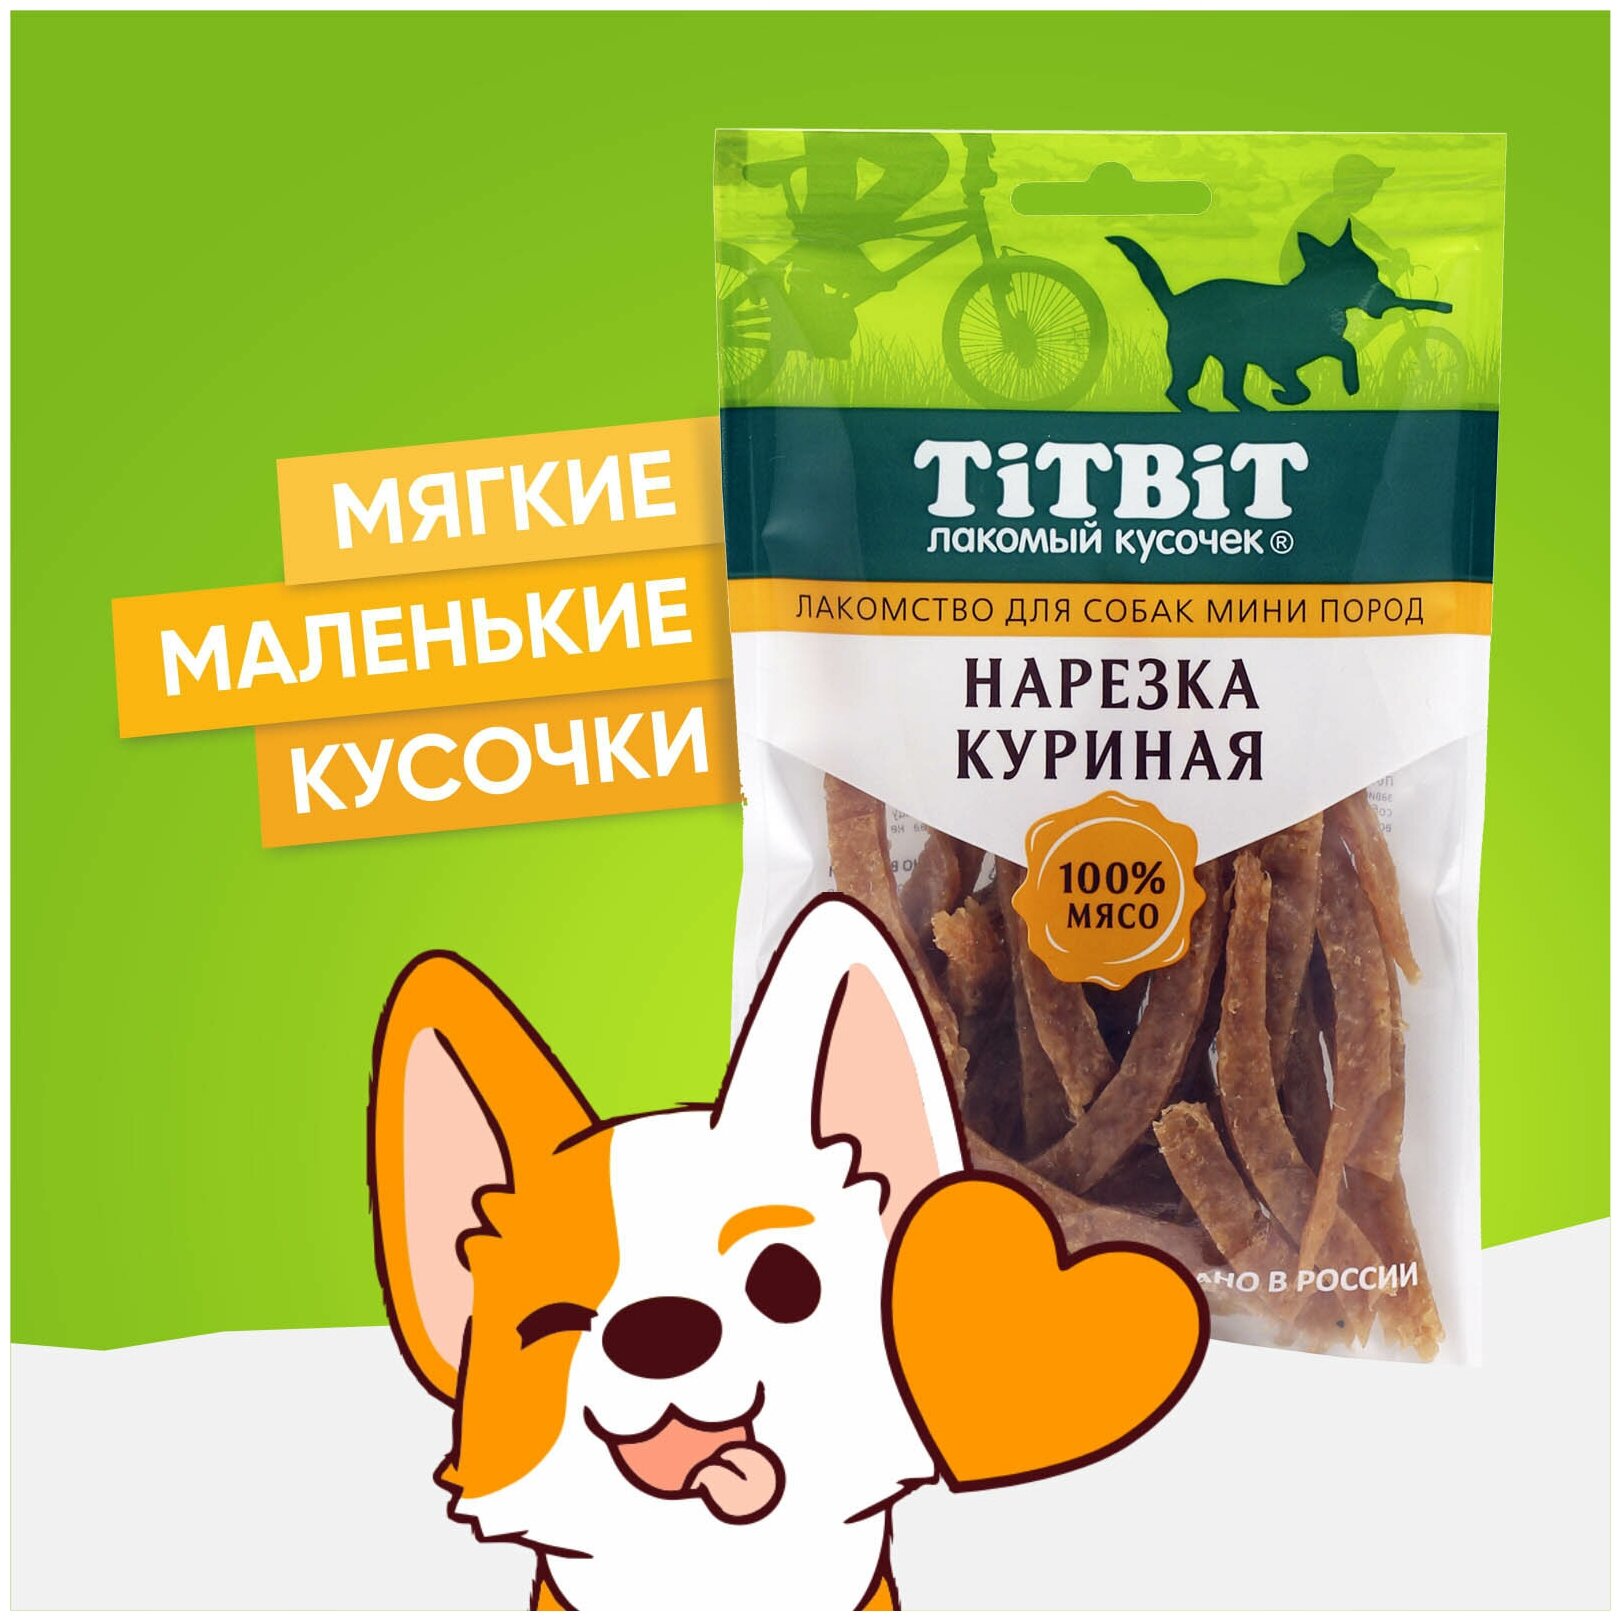 Лакомство для собак мини-пород TiTBiT Нарезка куриная 70 г